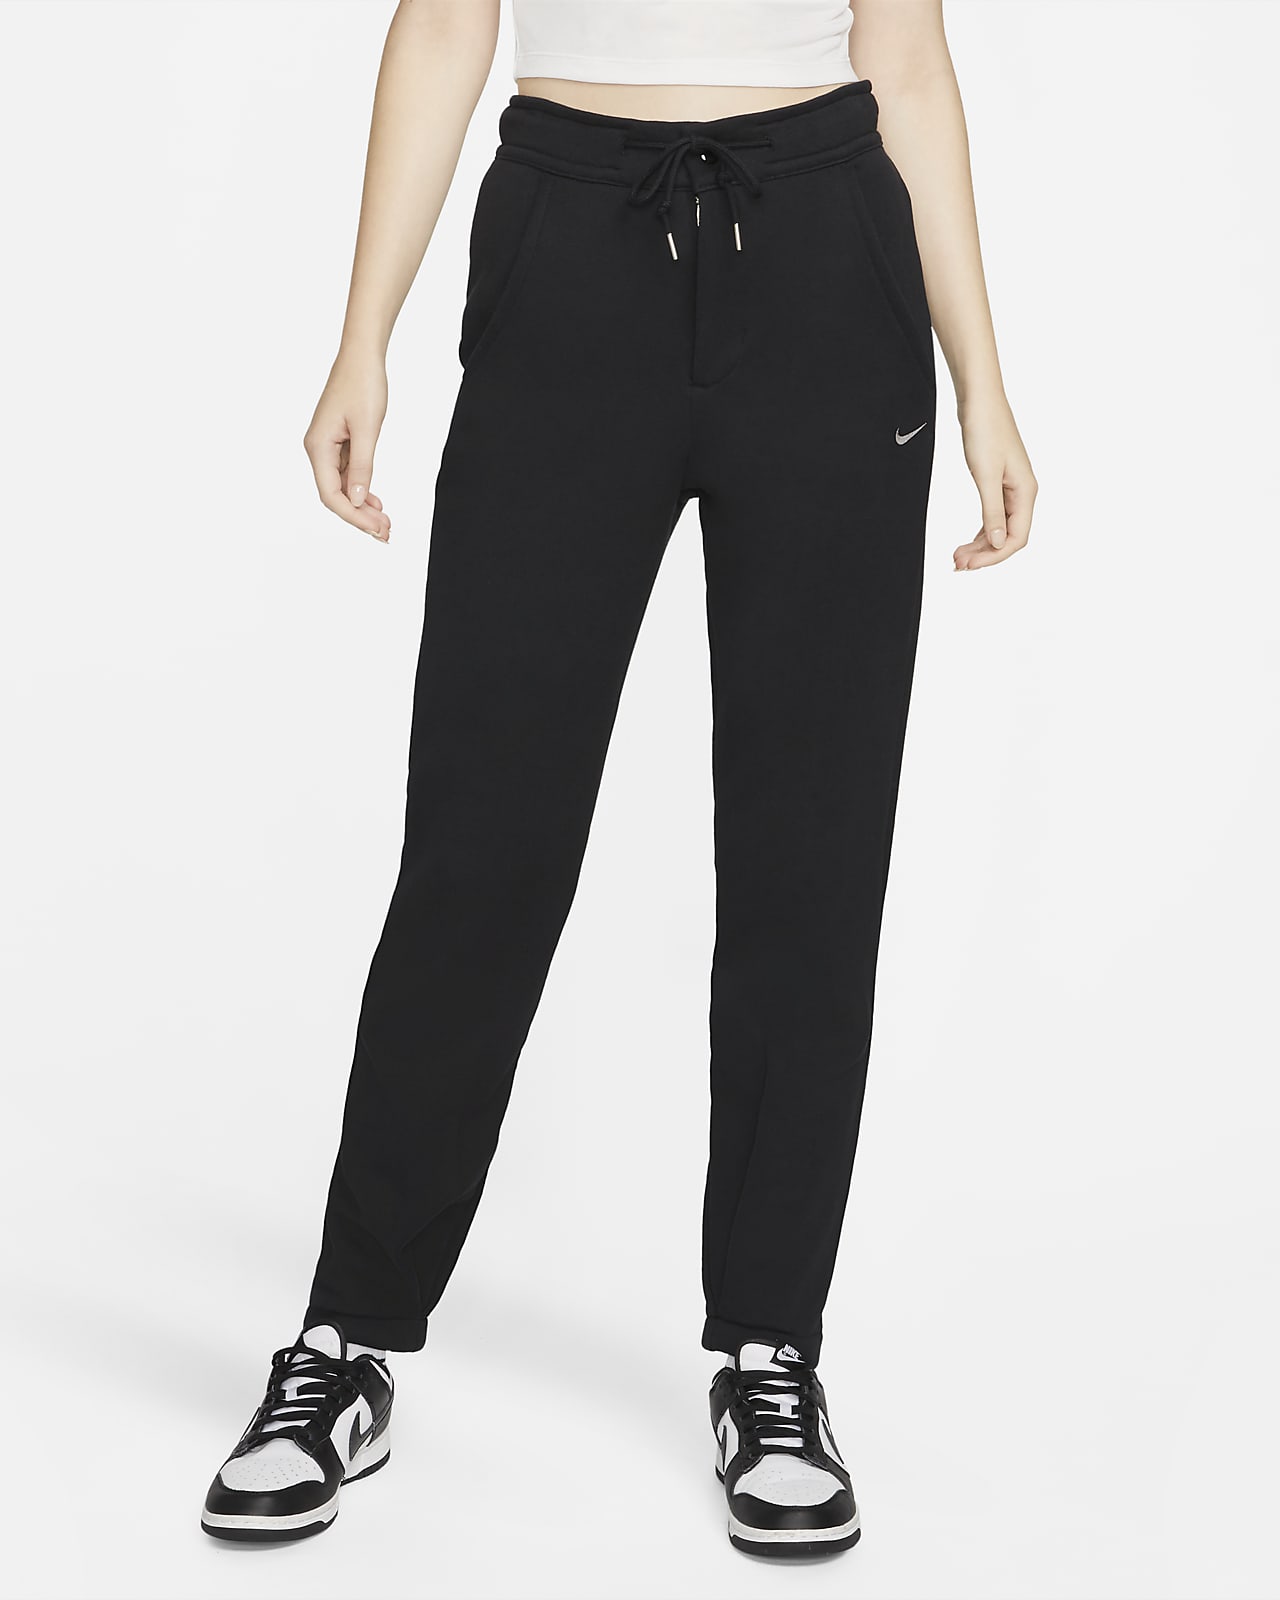 Nike Sportswear Modern Fleece Women\'s High-Waisted Terry Nike Pants. French